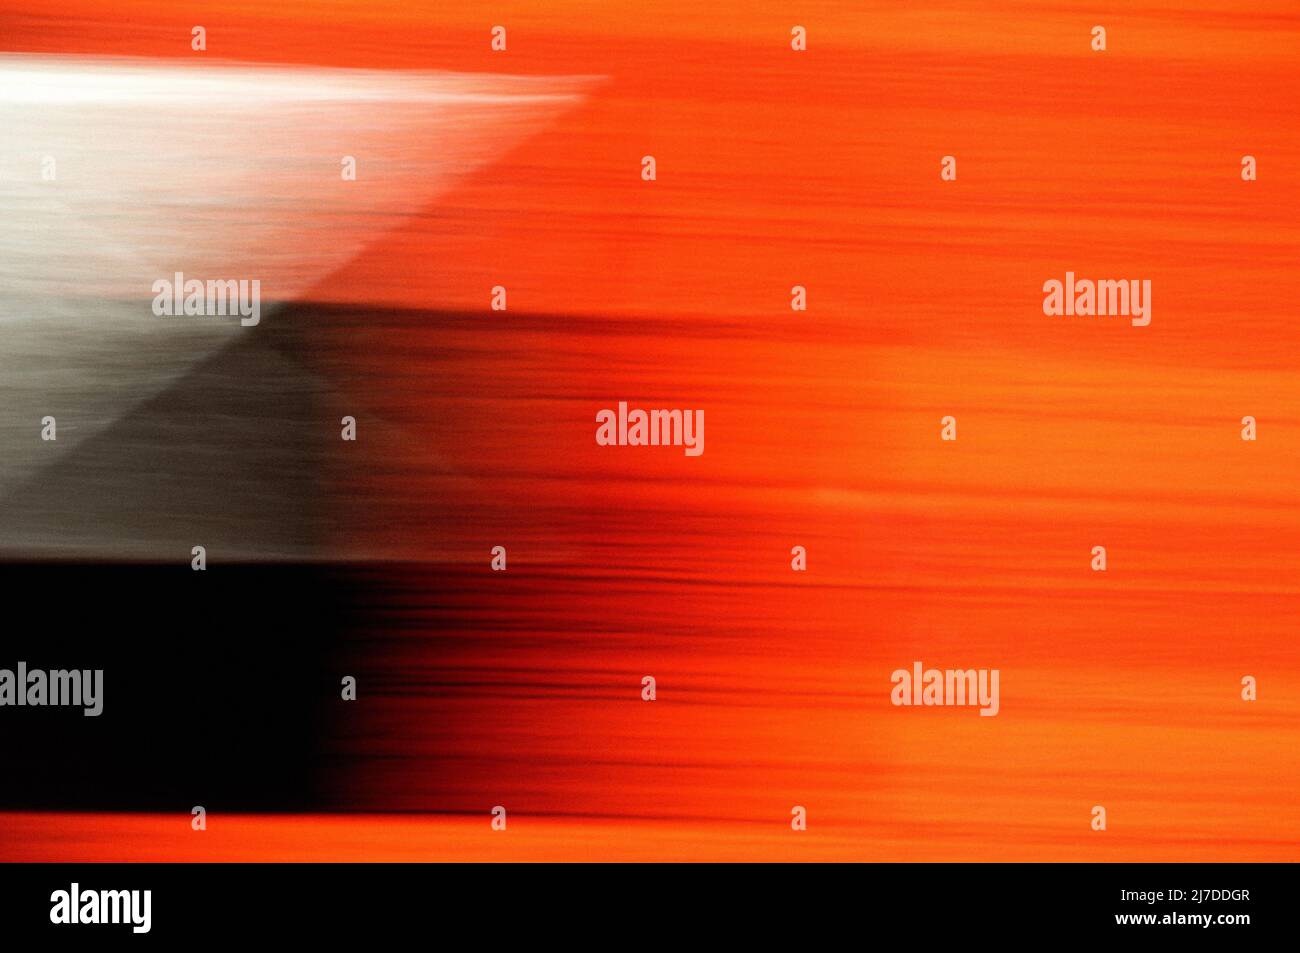 Blurred motion design of orange, black and white. Stock Photo